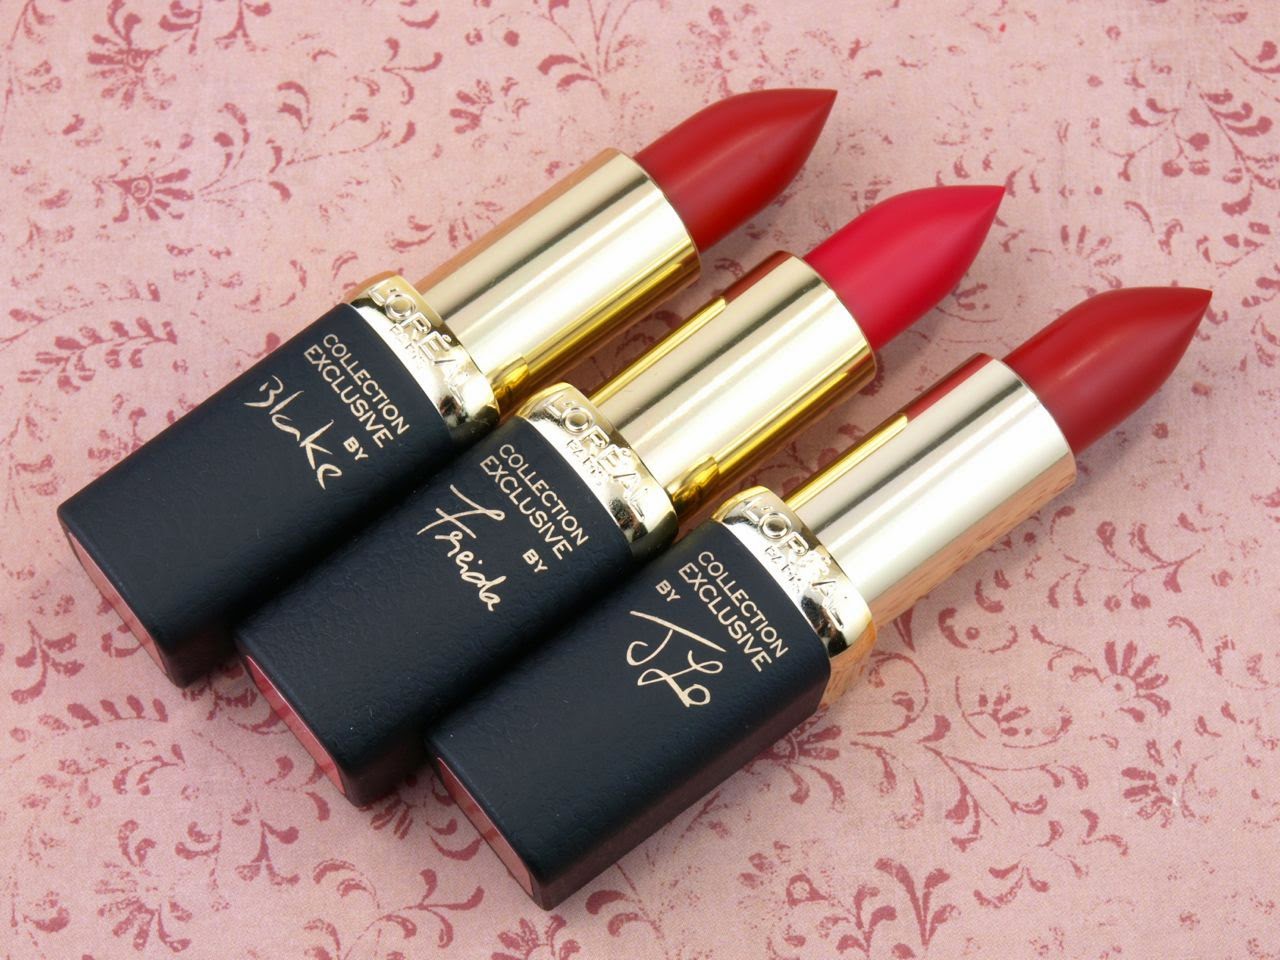 L'Oreal Collection Exclusive Pure Reds by Color Riche Lipsti